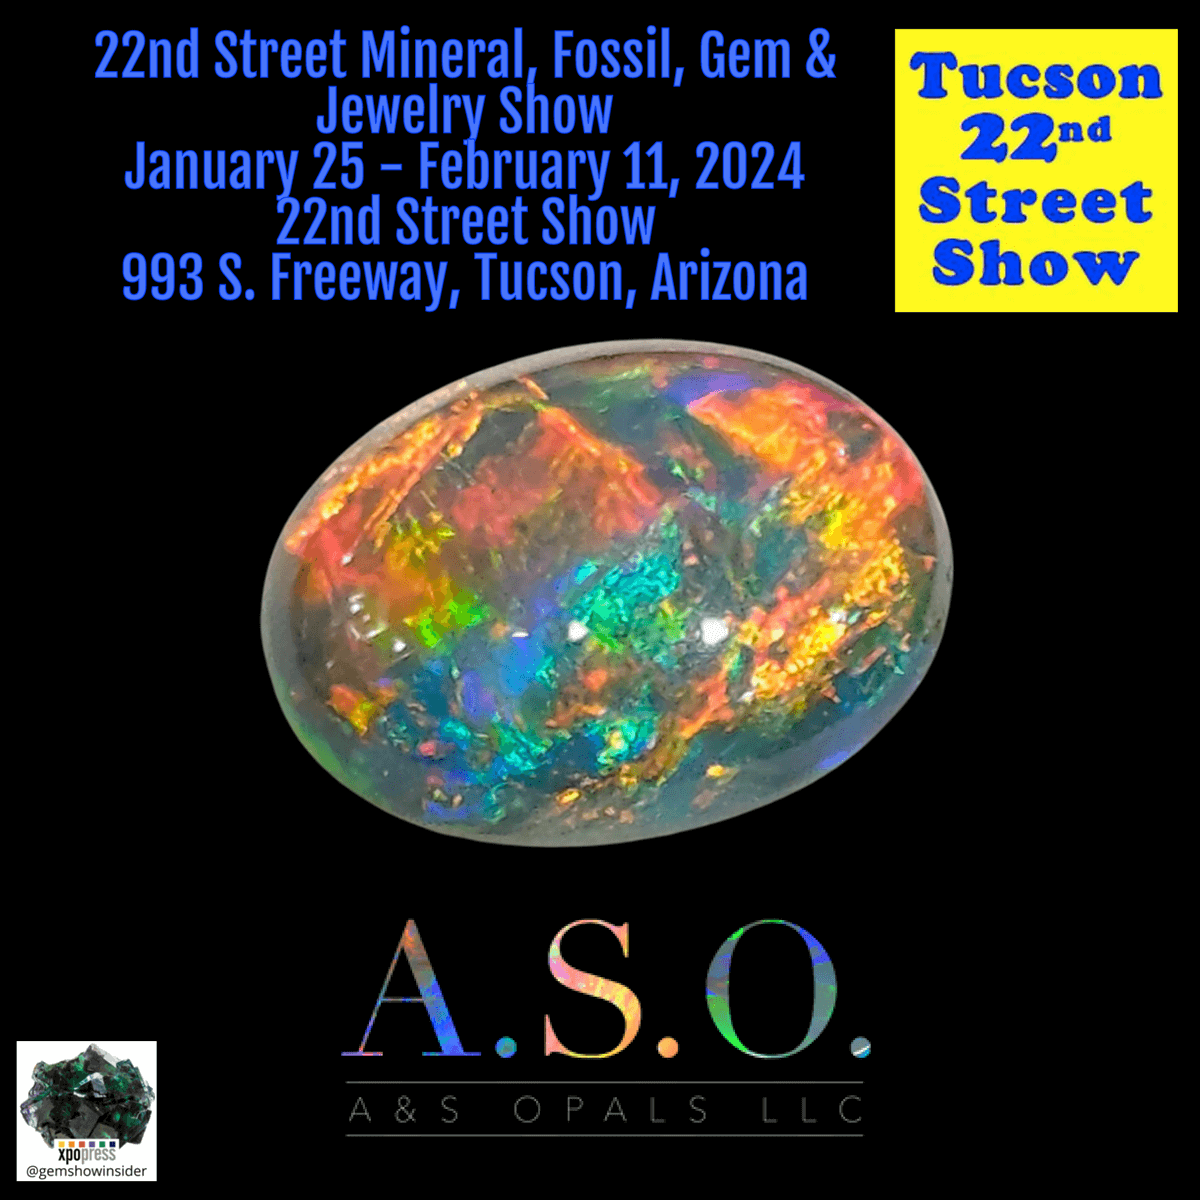 22nd Street Mineral, Fossil, Gem & Jewelry Show 2024